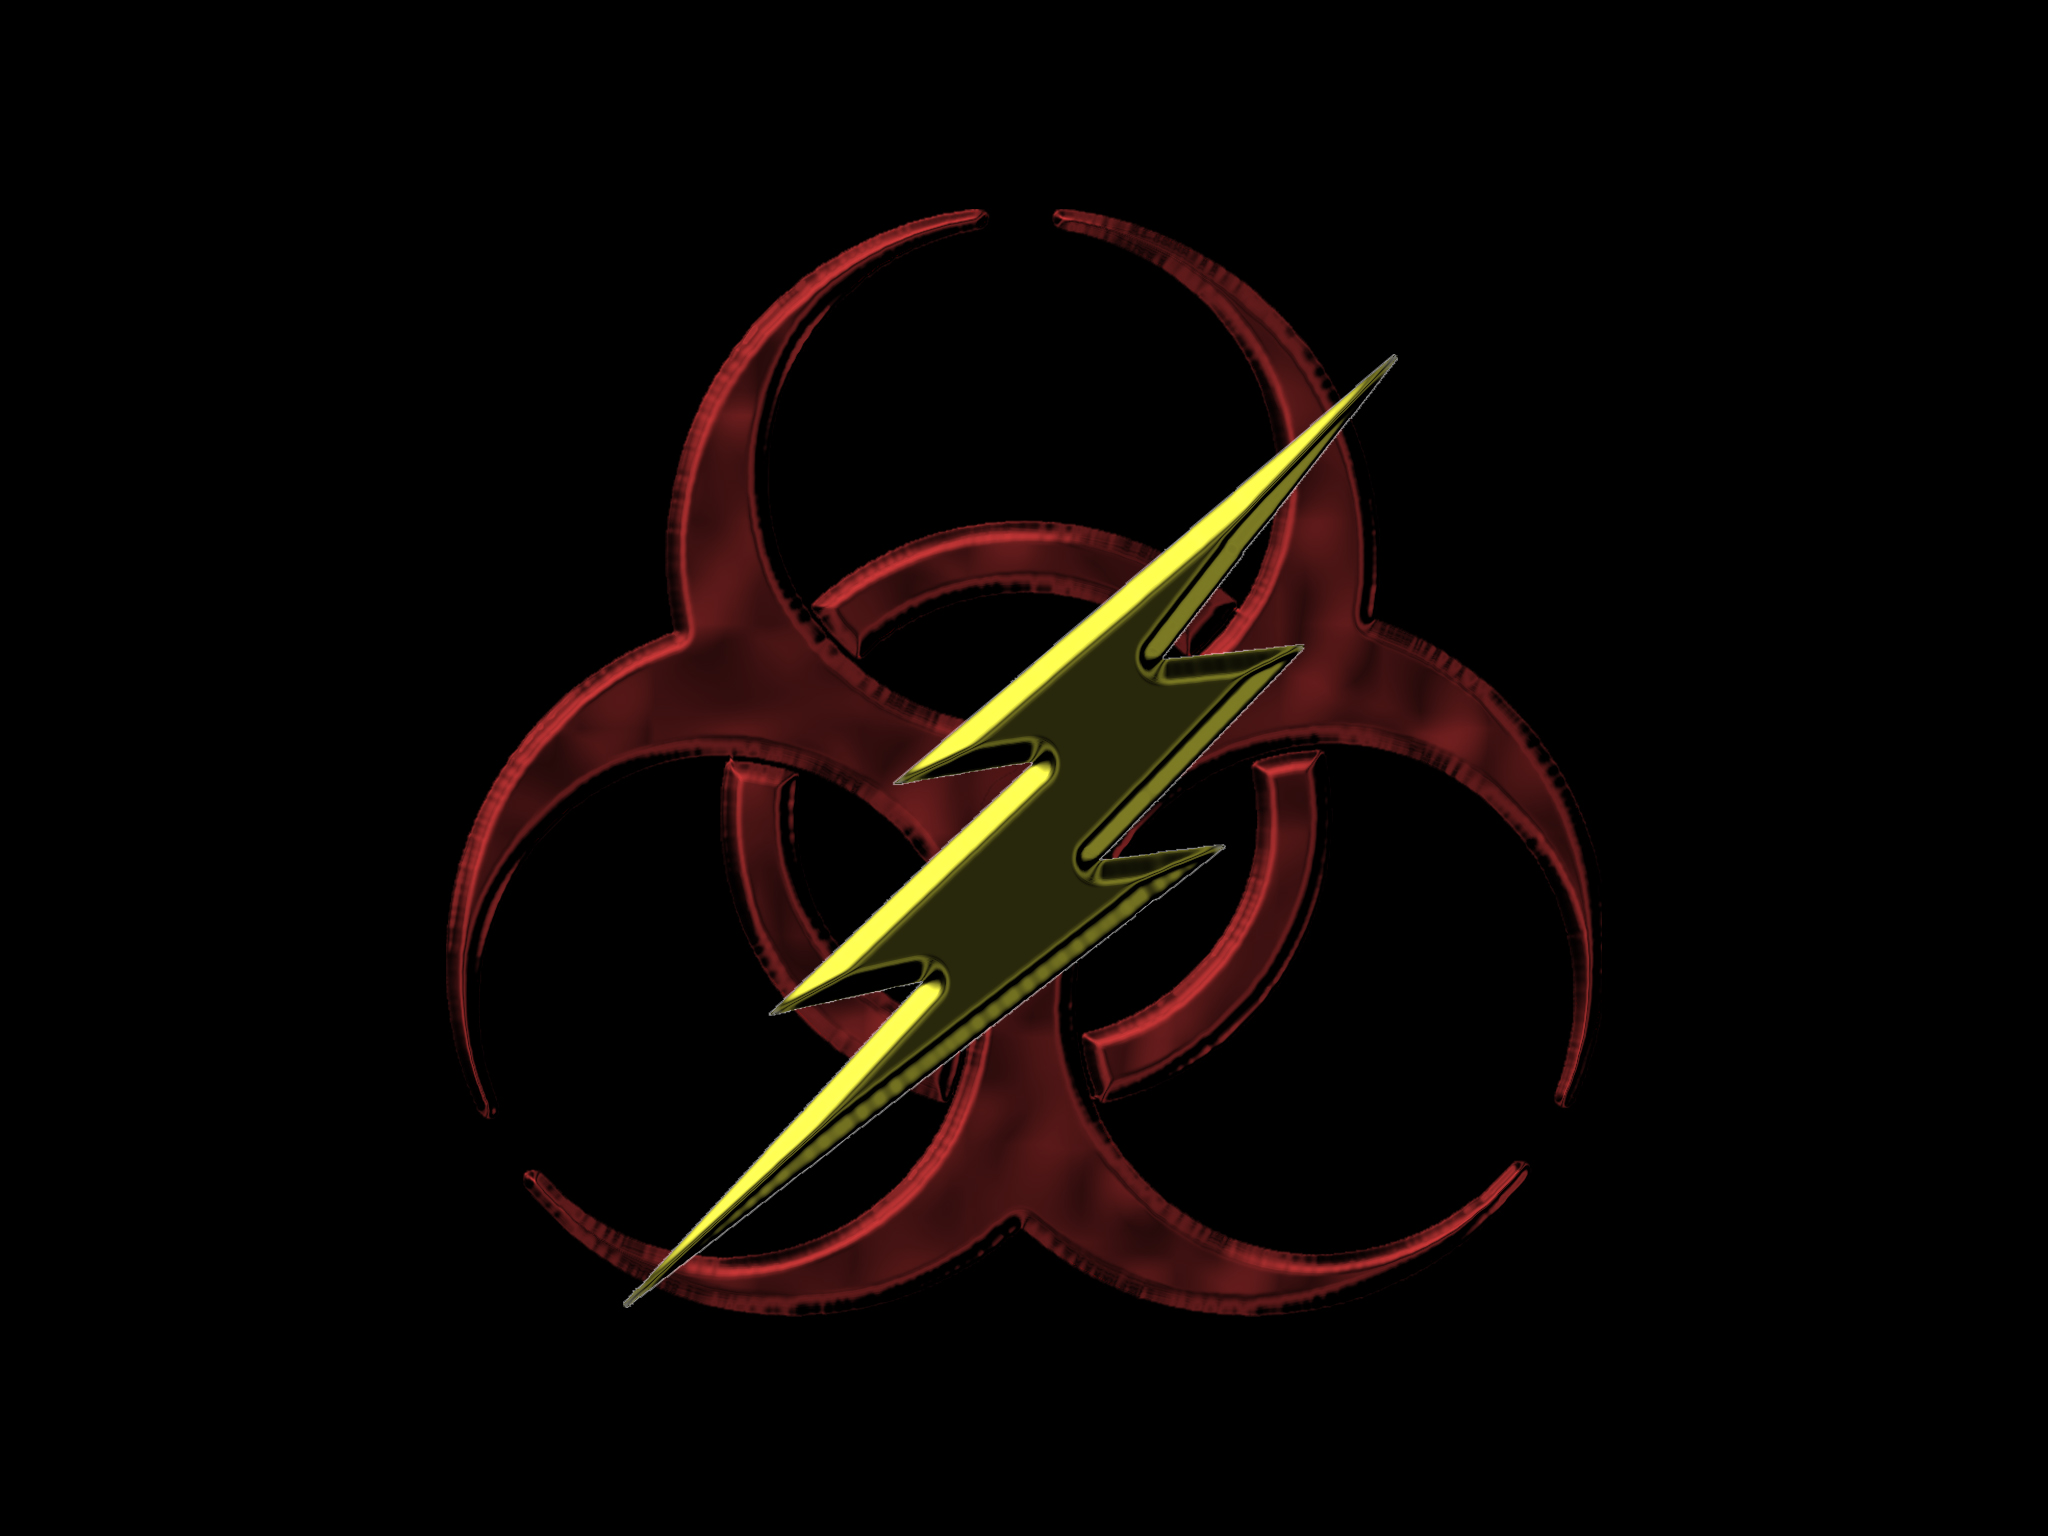 Cool Biohazard Symbols Flash Hybrid By